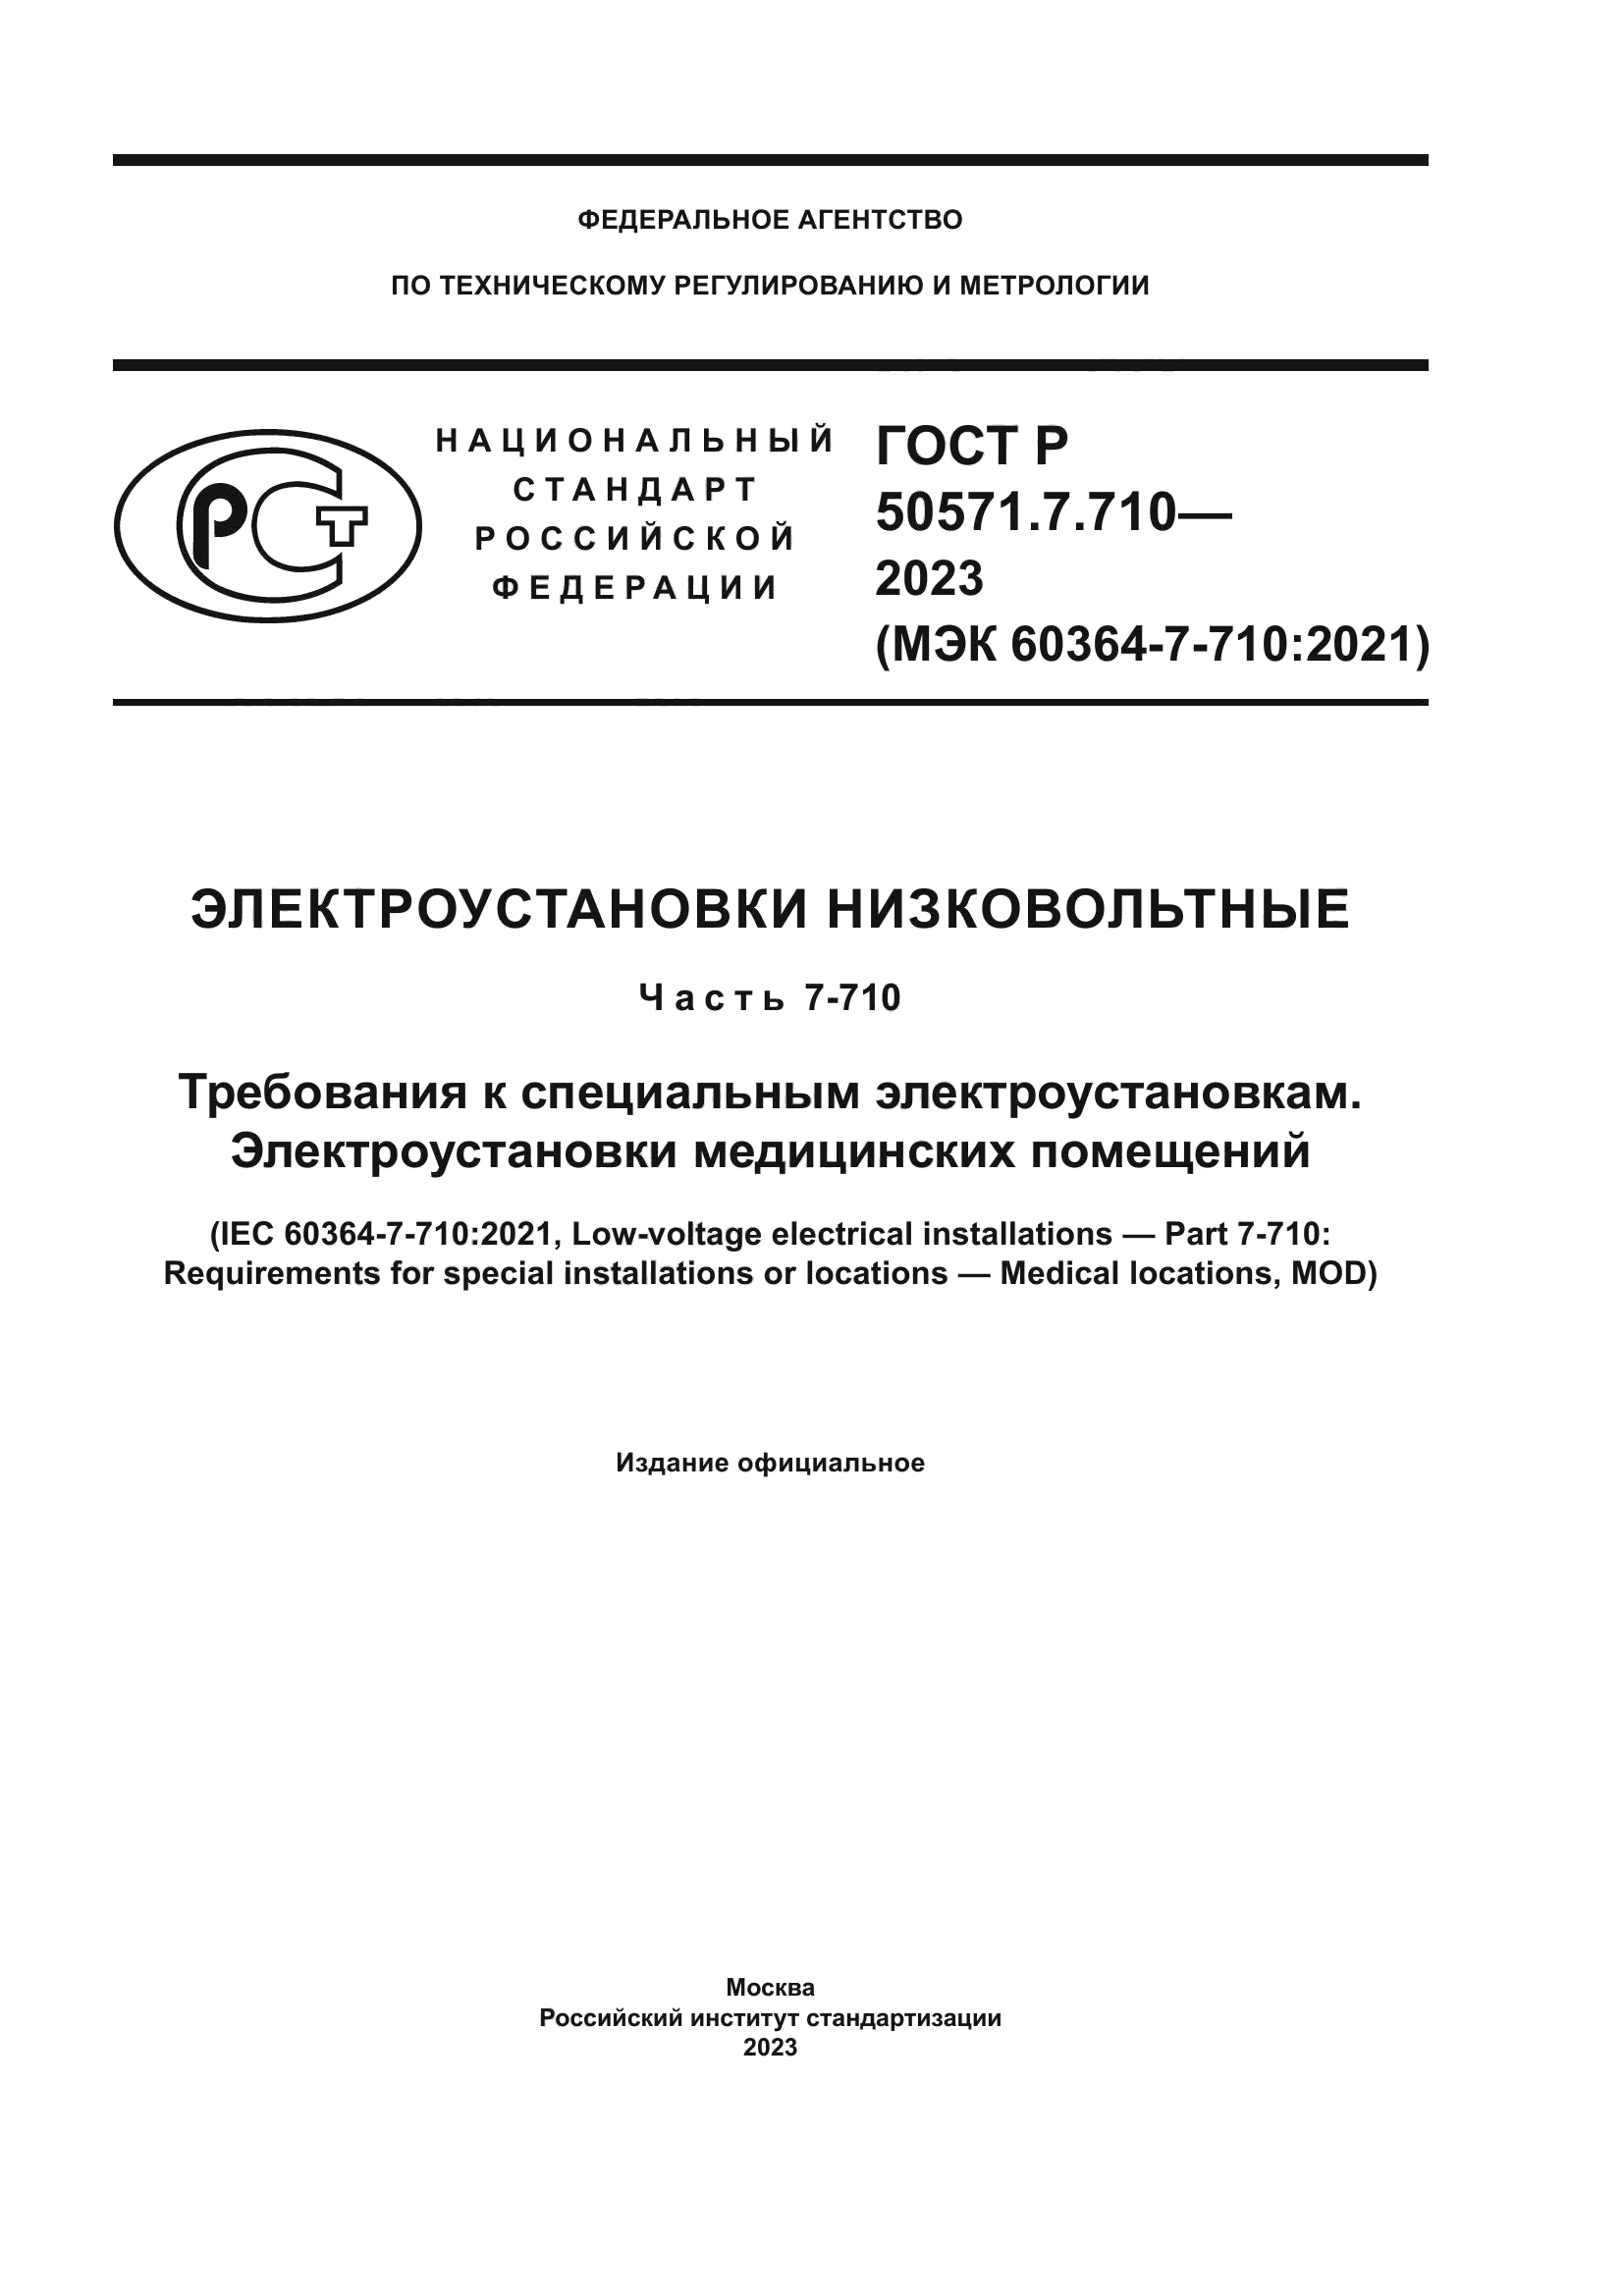 ГОСТ Р 50571.7.710-2023